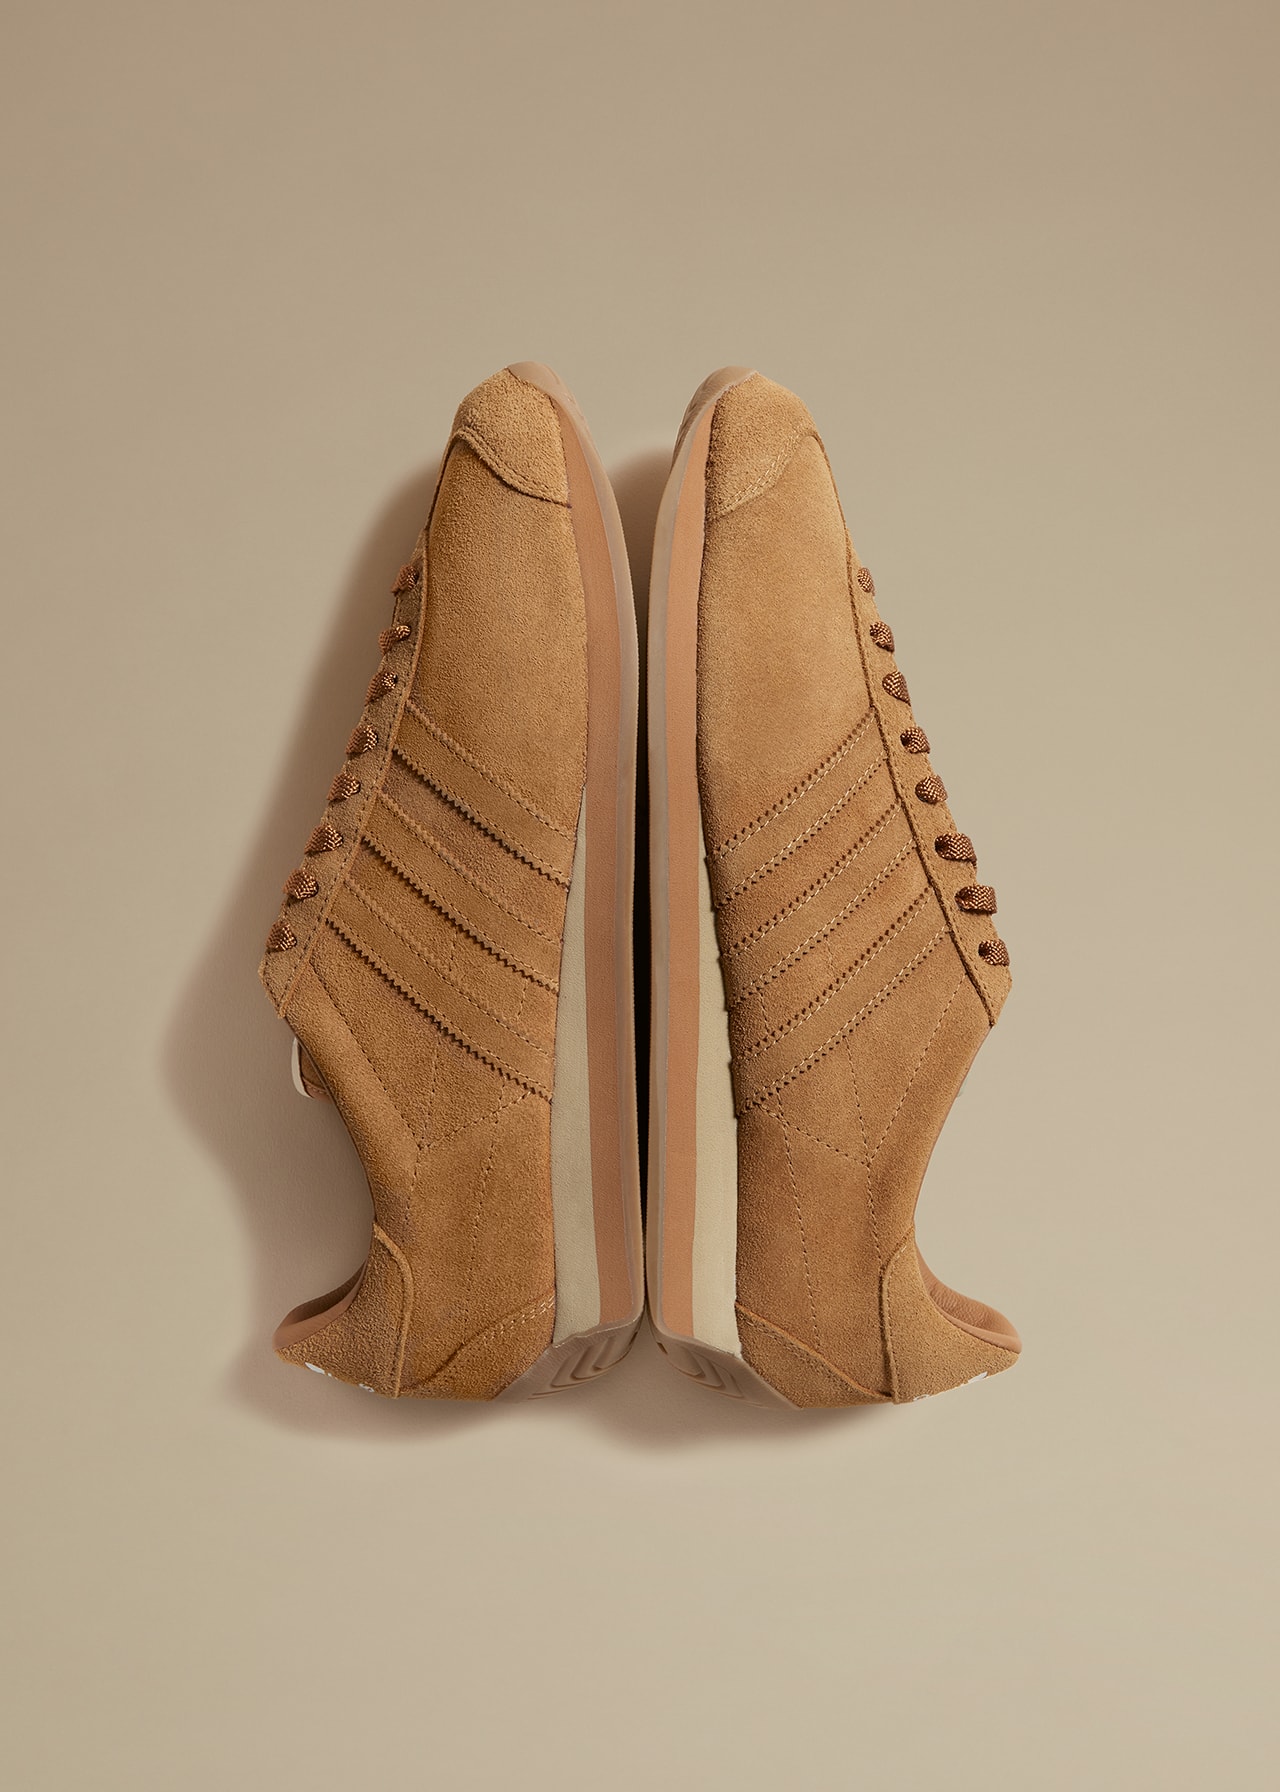 Khaite adidas Originals Women Sneaker Collaboration Fall Winter 2020 Camel